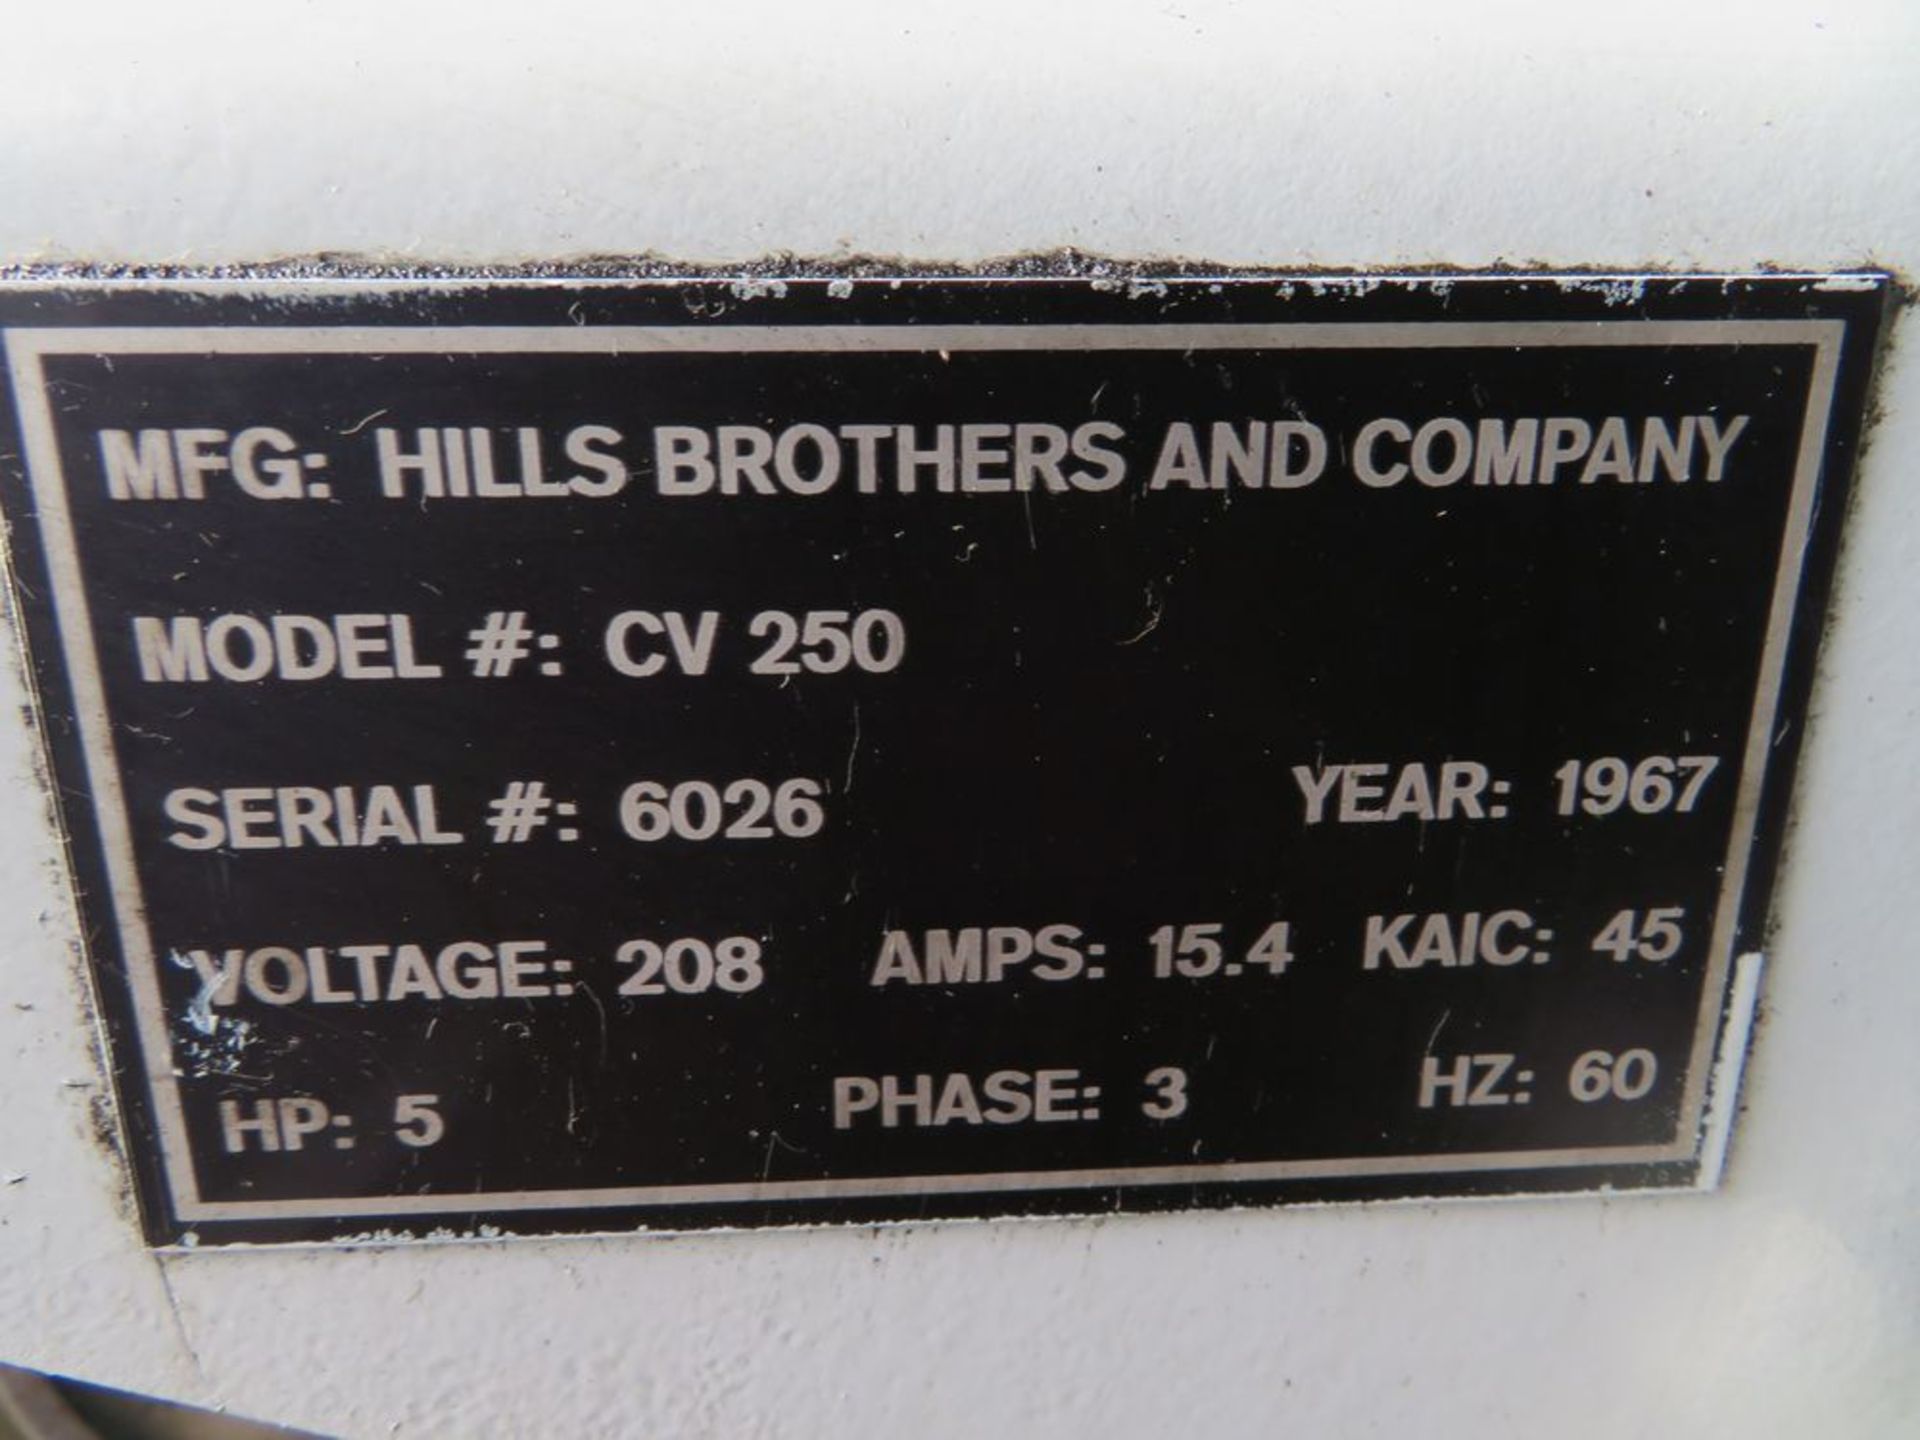 Hilk Bros. 5hp mod. CV250 Vertical Air Comp. 208 Volts - Image 2 of 2